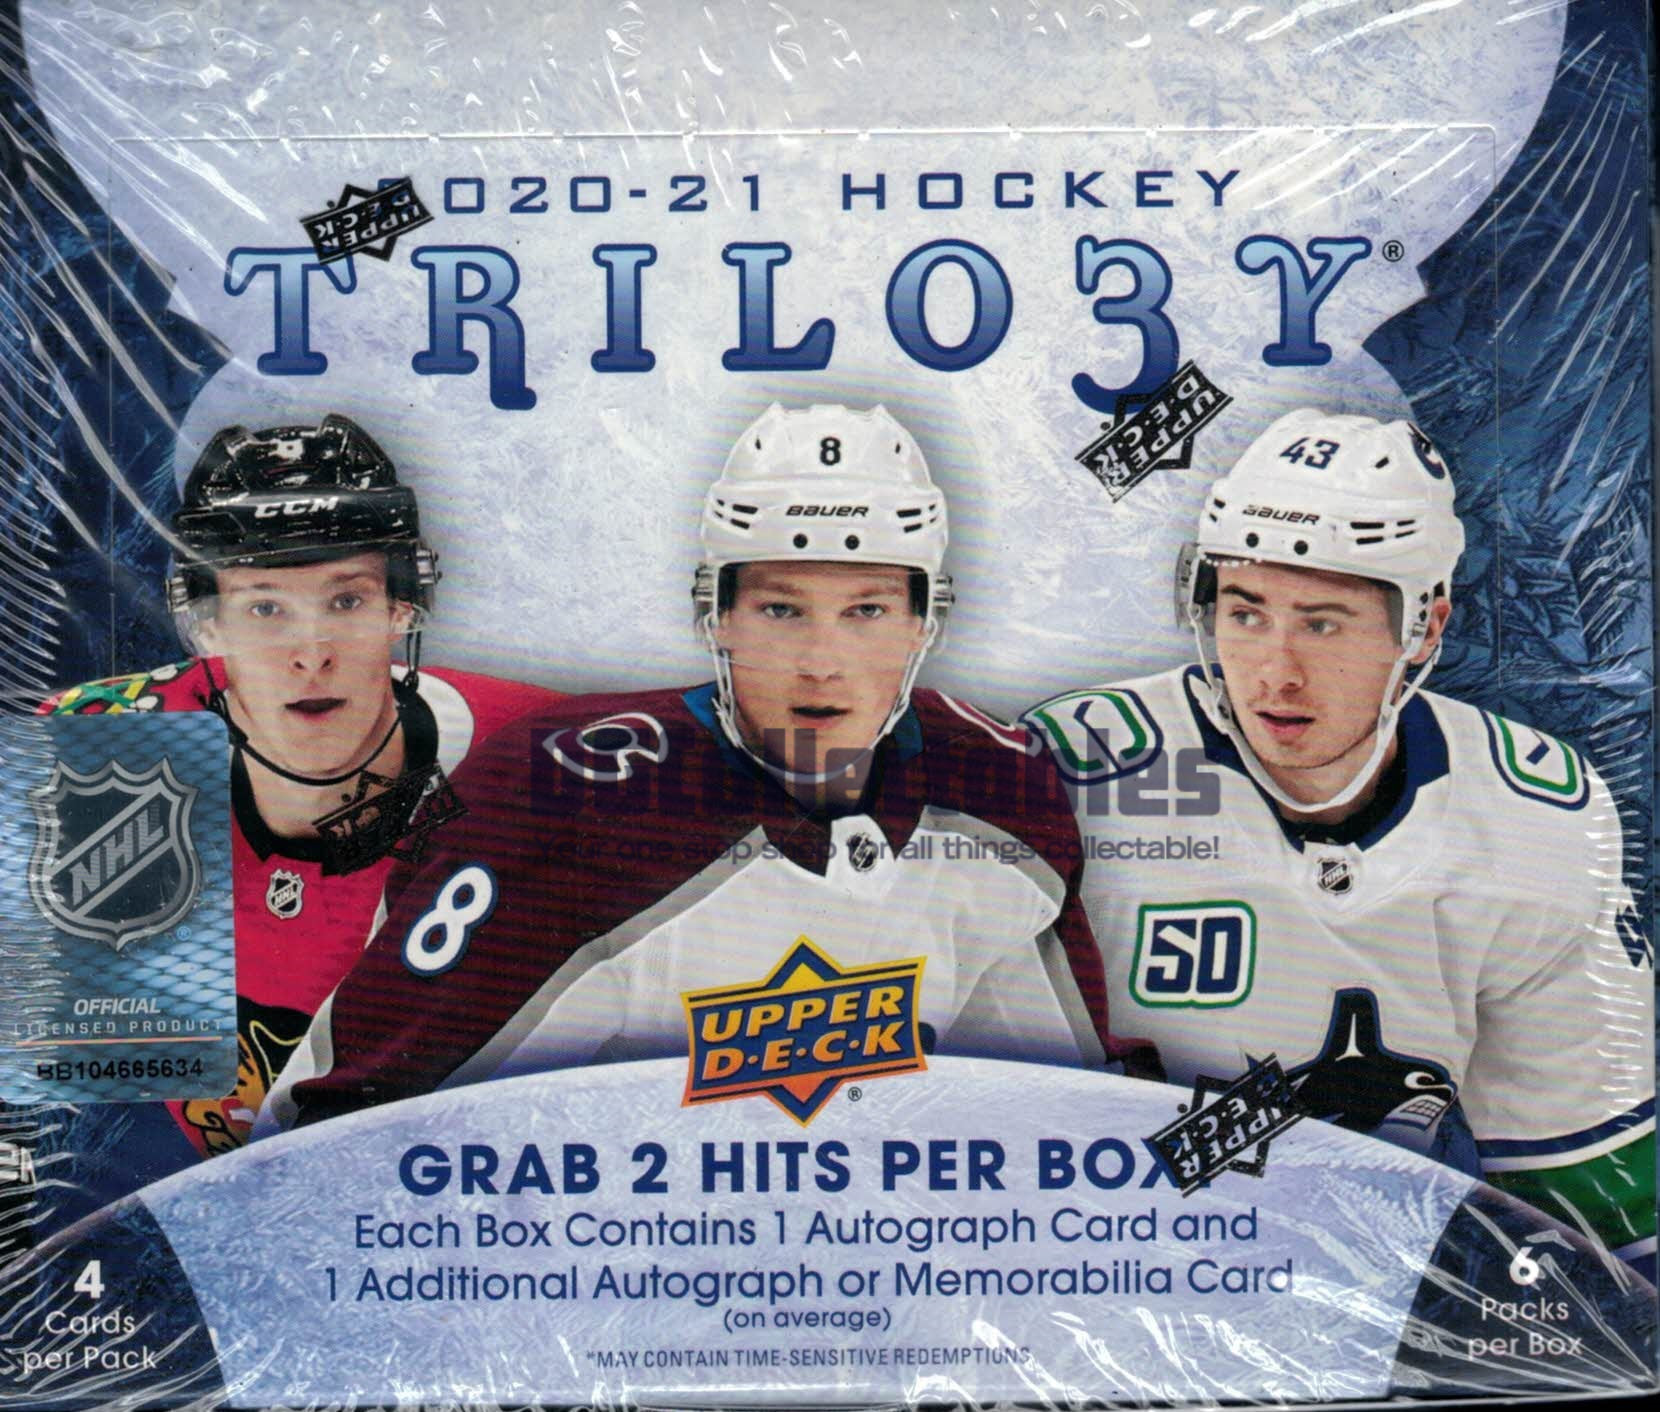 2020/21 Upper Deck Trilogy Hockey Hobby Box